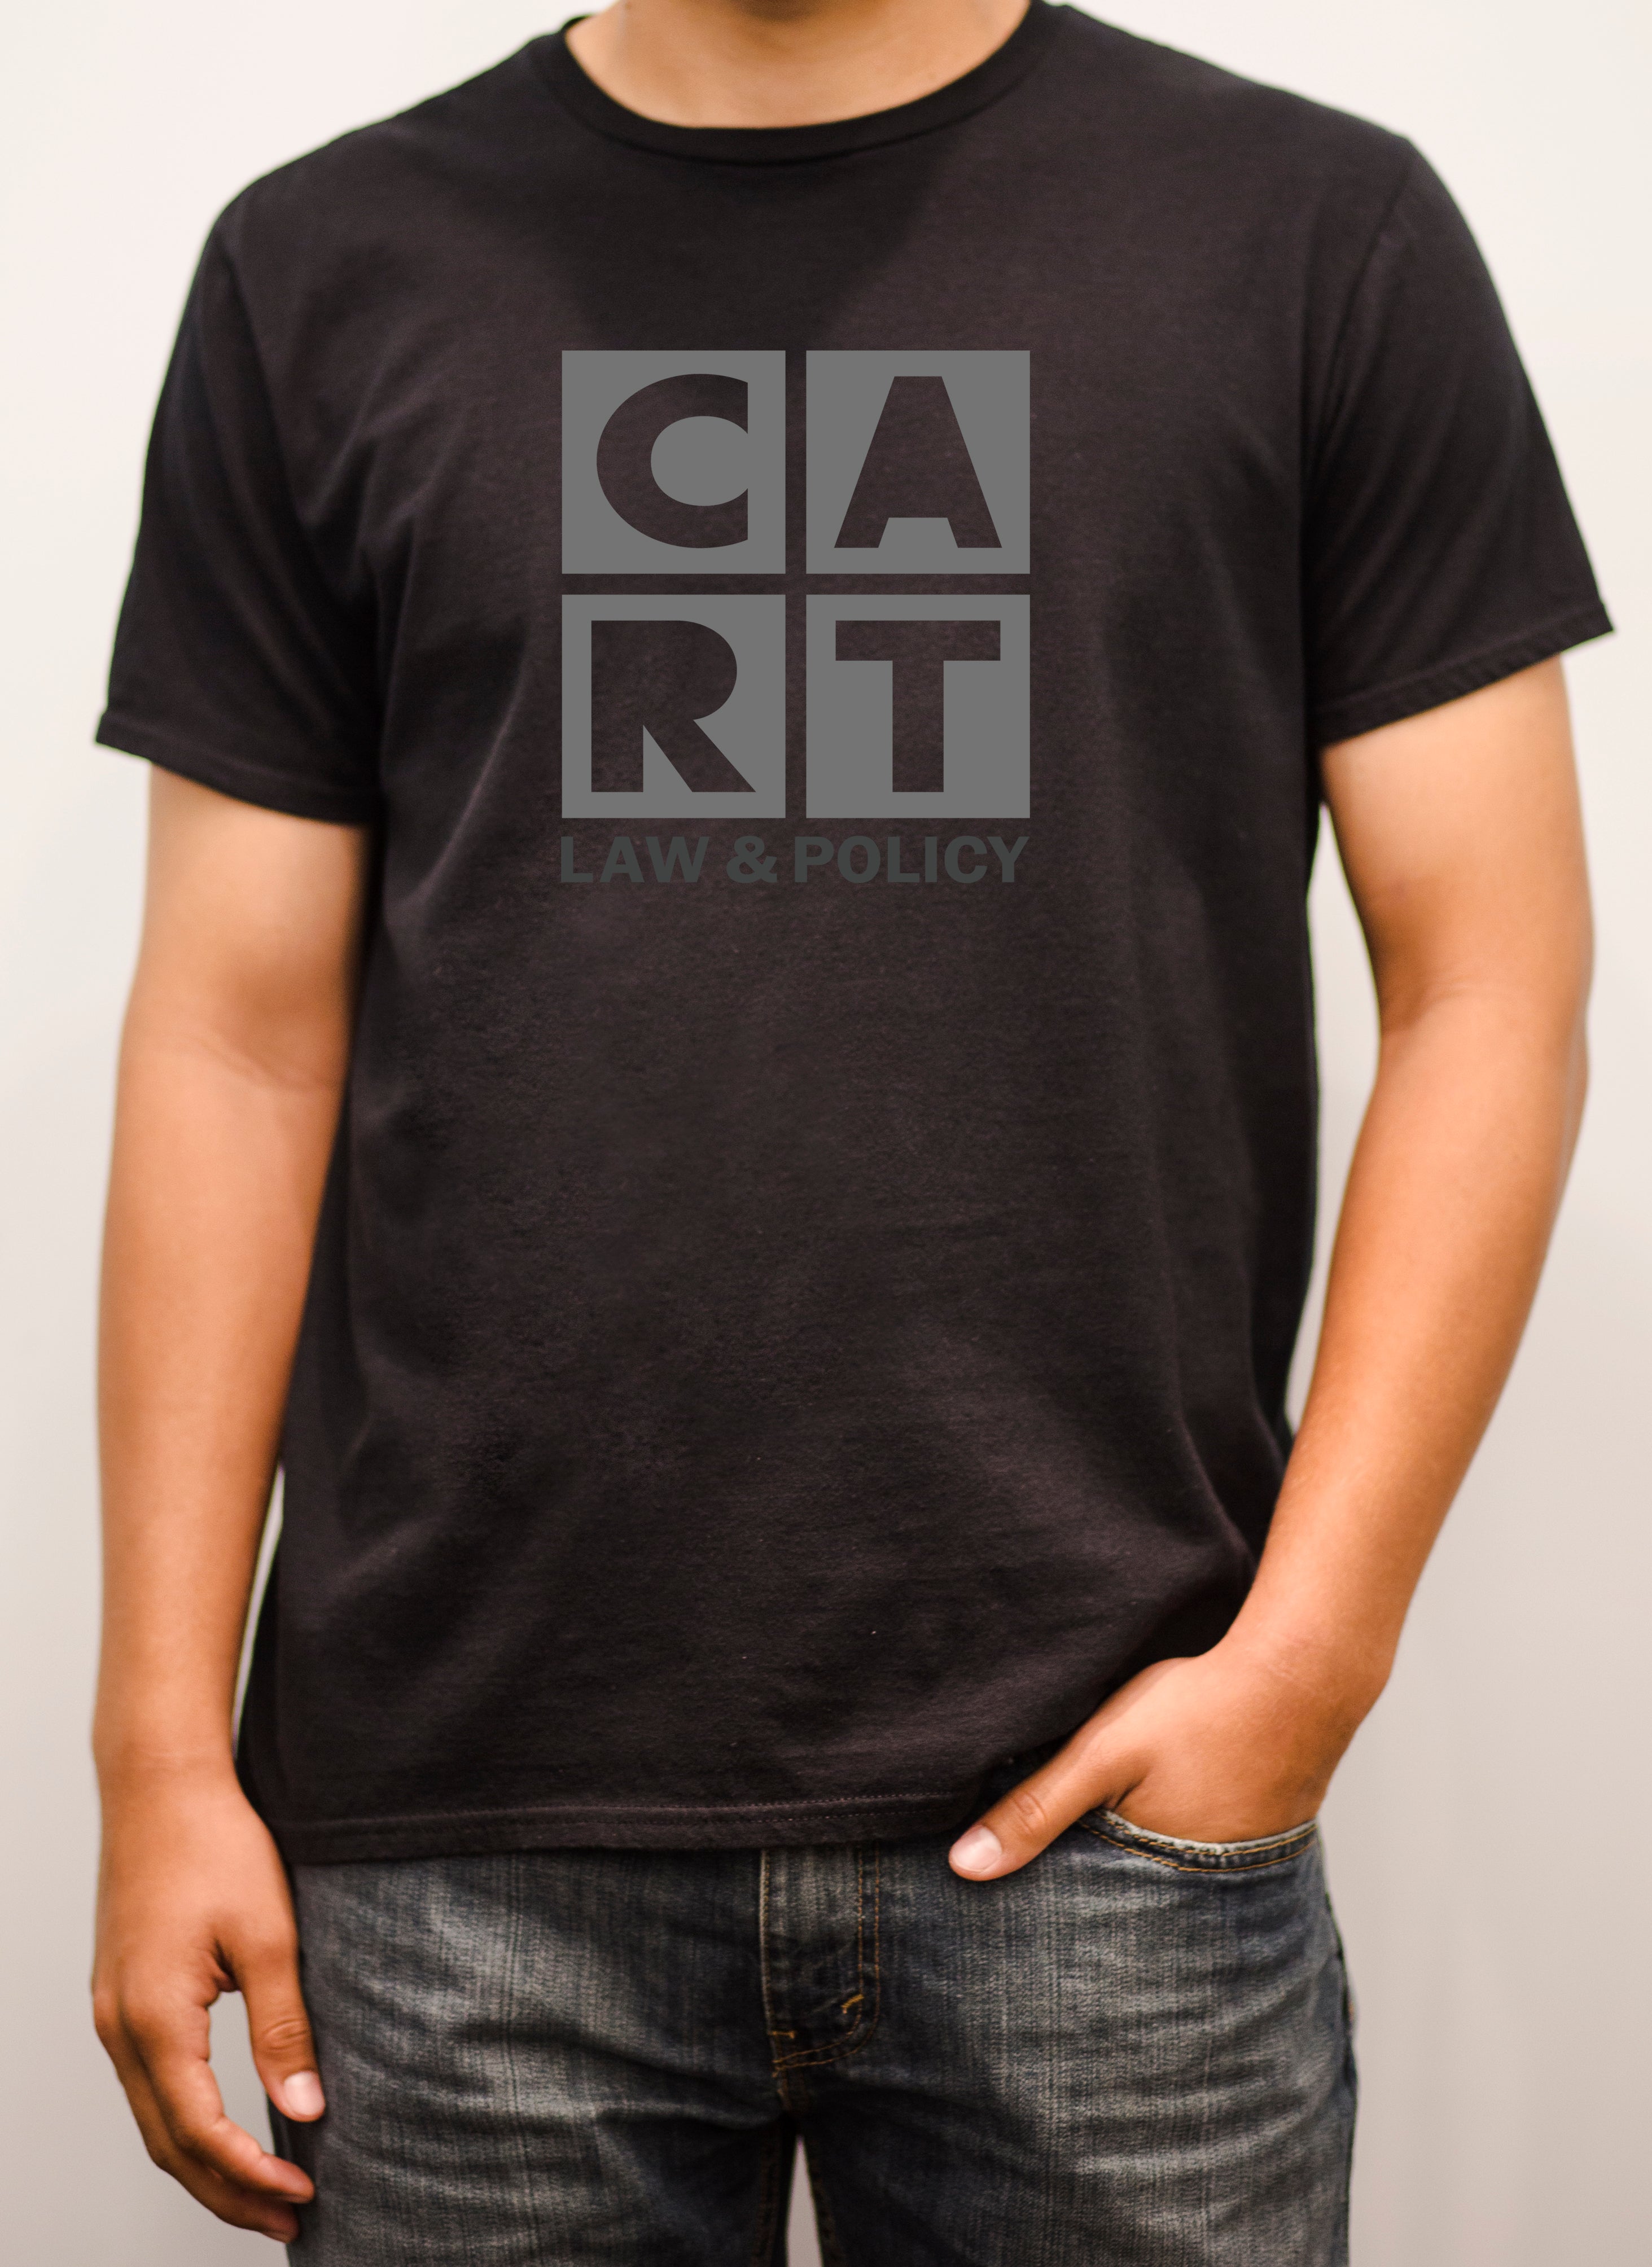 Short sleeve t-shirt (Unisex fit) - Law & Policy black/grey logo